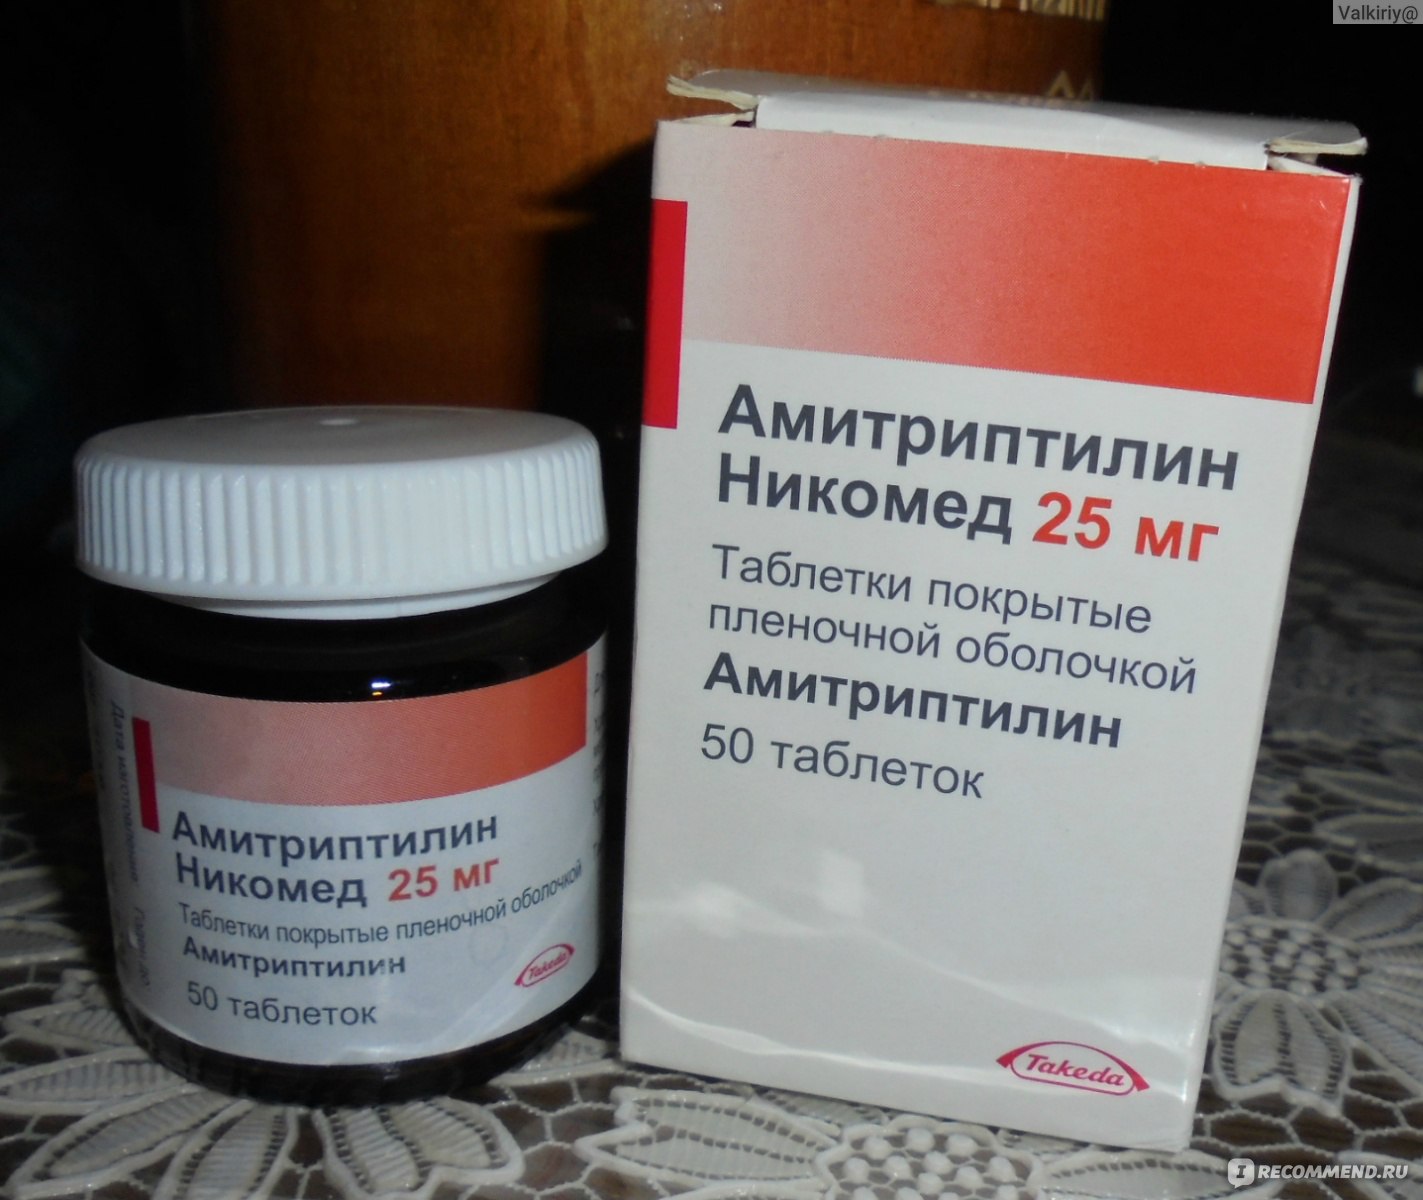 Амитриптилин
                                            (amitriptyline)